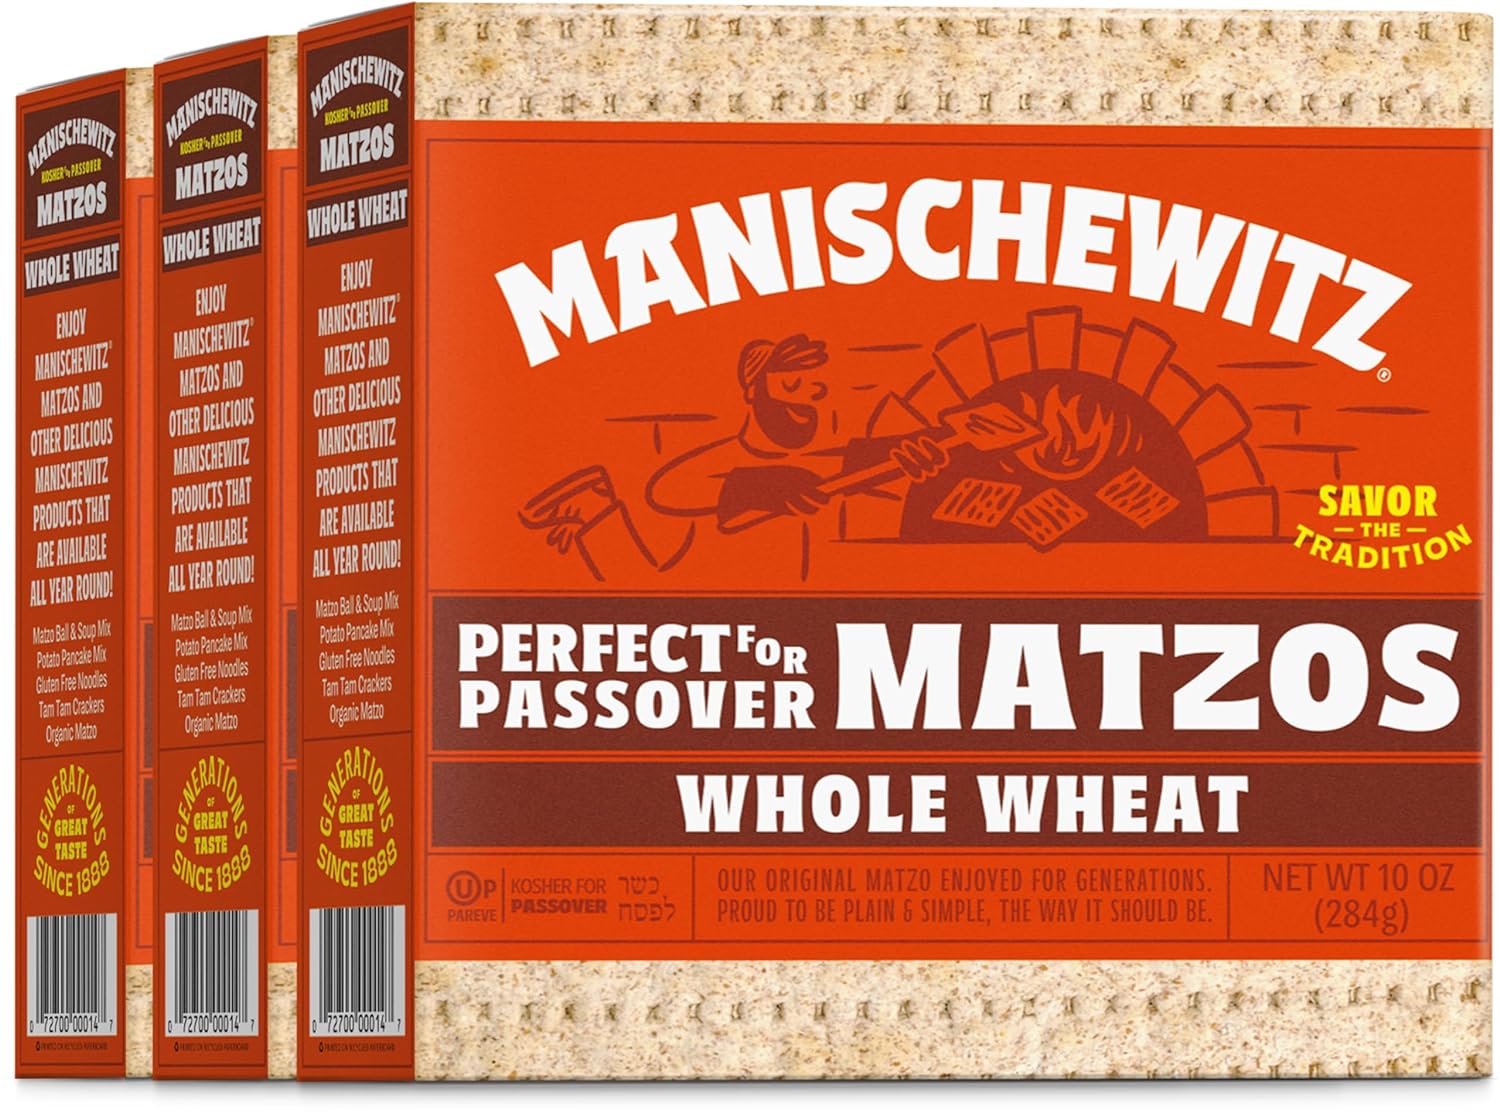 Manischewitz Passover Whole Wheat Matzo 10 oz (3 Pack) Thin, Crisp & Delicious, Just 2 Ingredients!